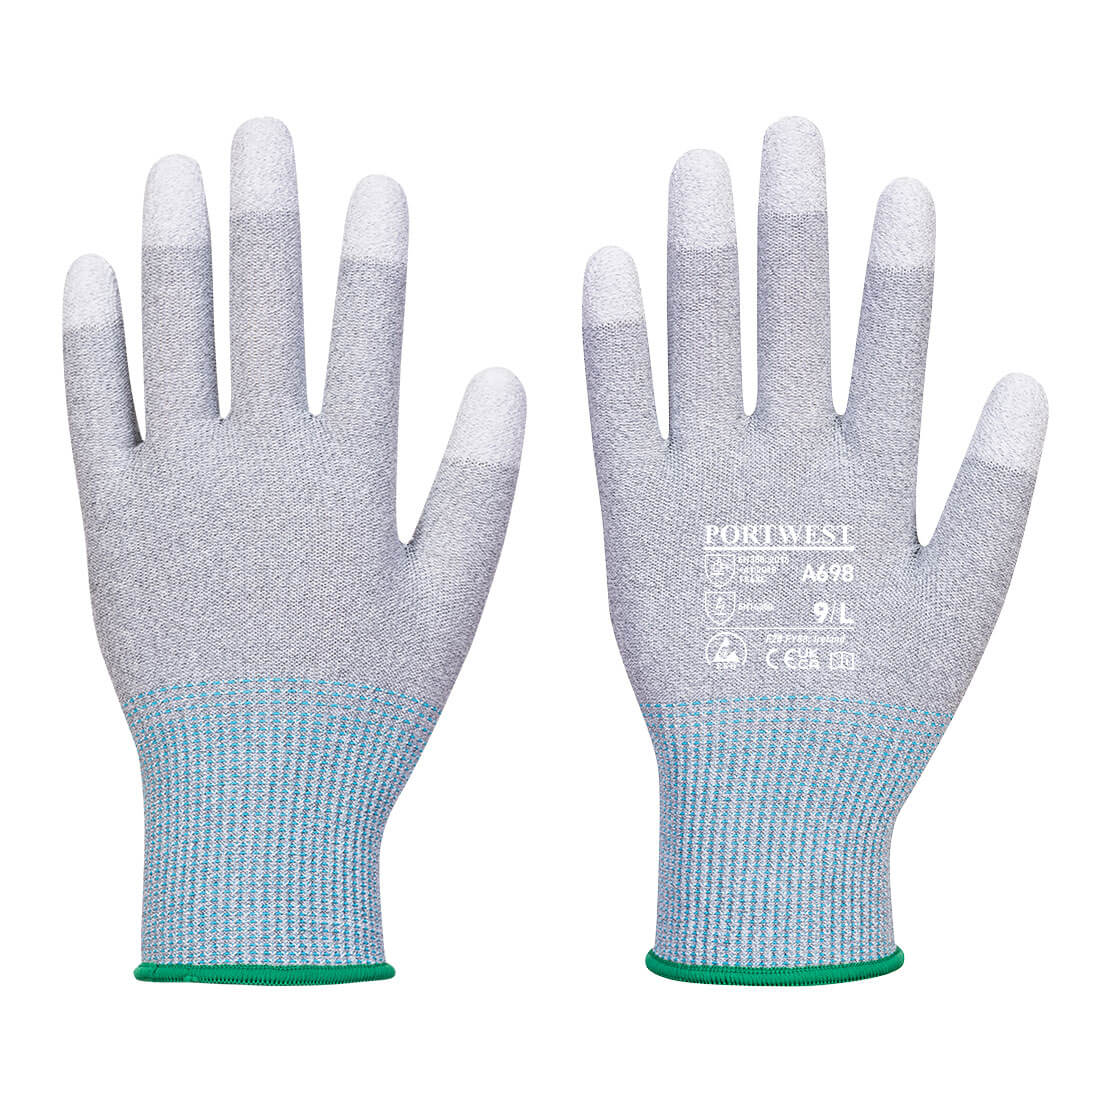 MR13 ESD PU Fingertip Glove - 12 Pack - Grey/White